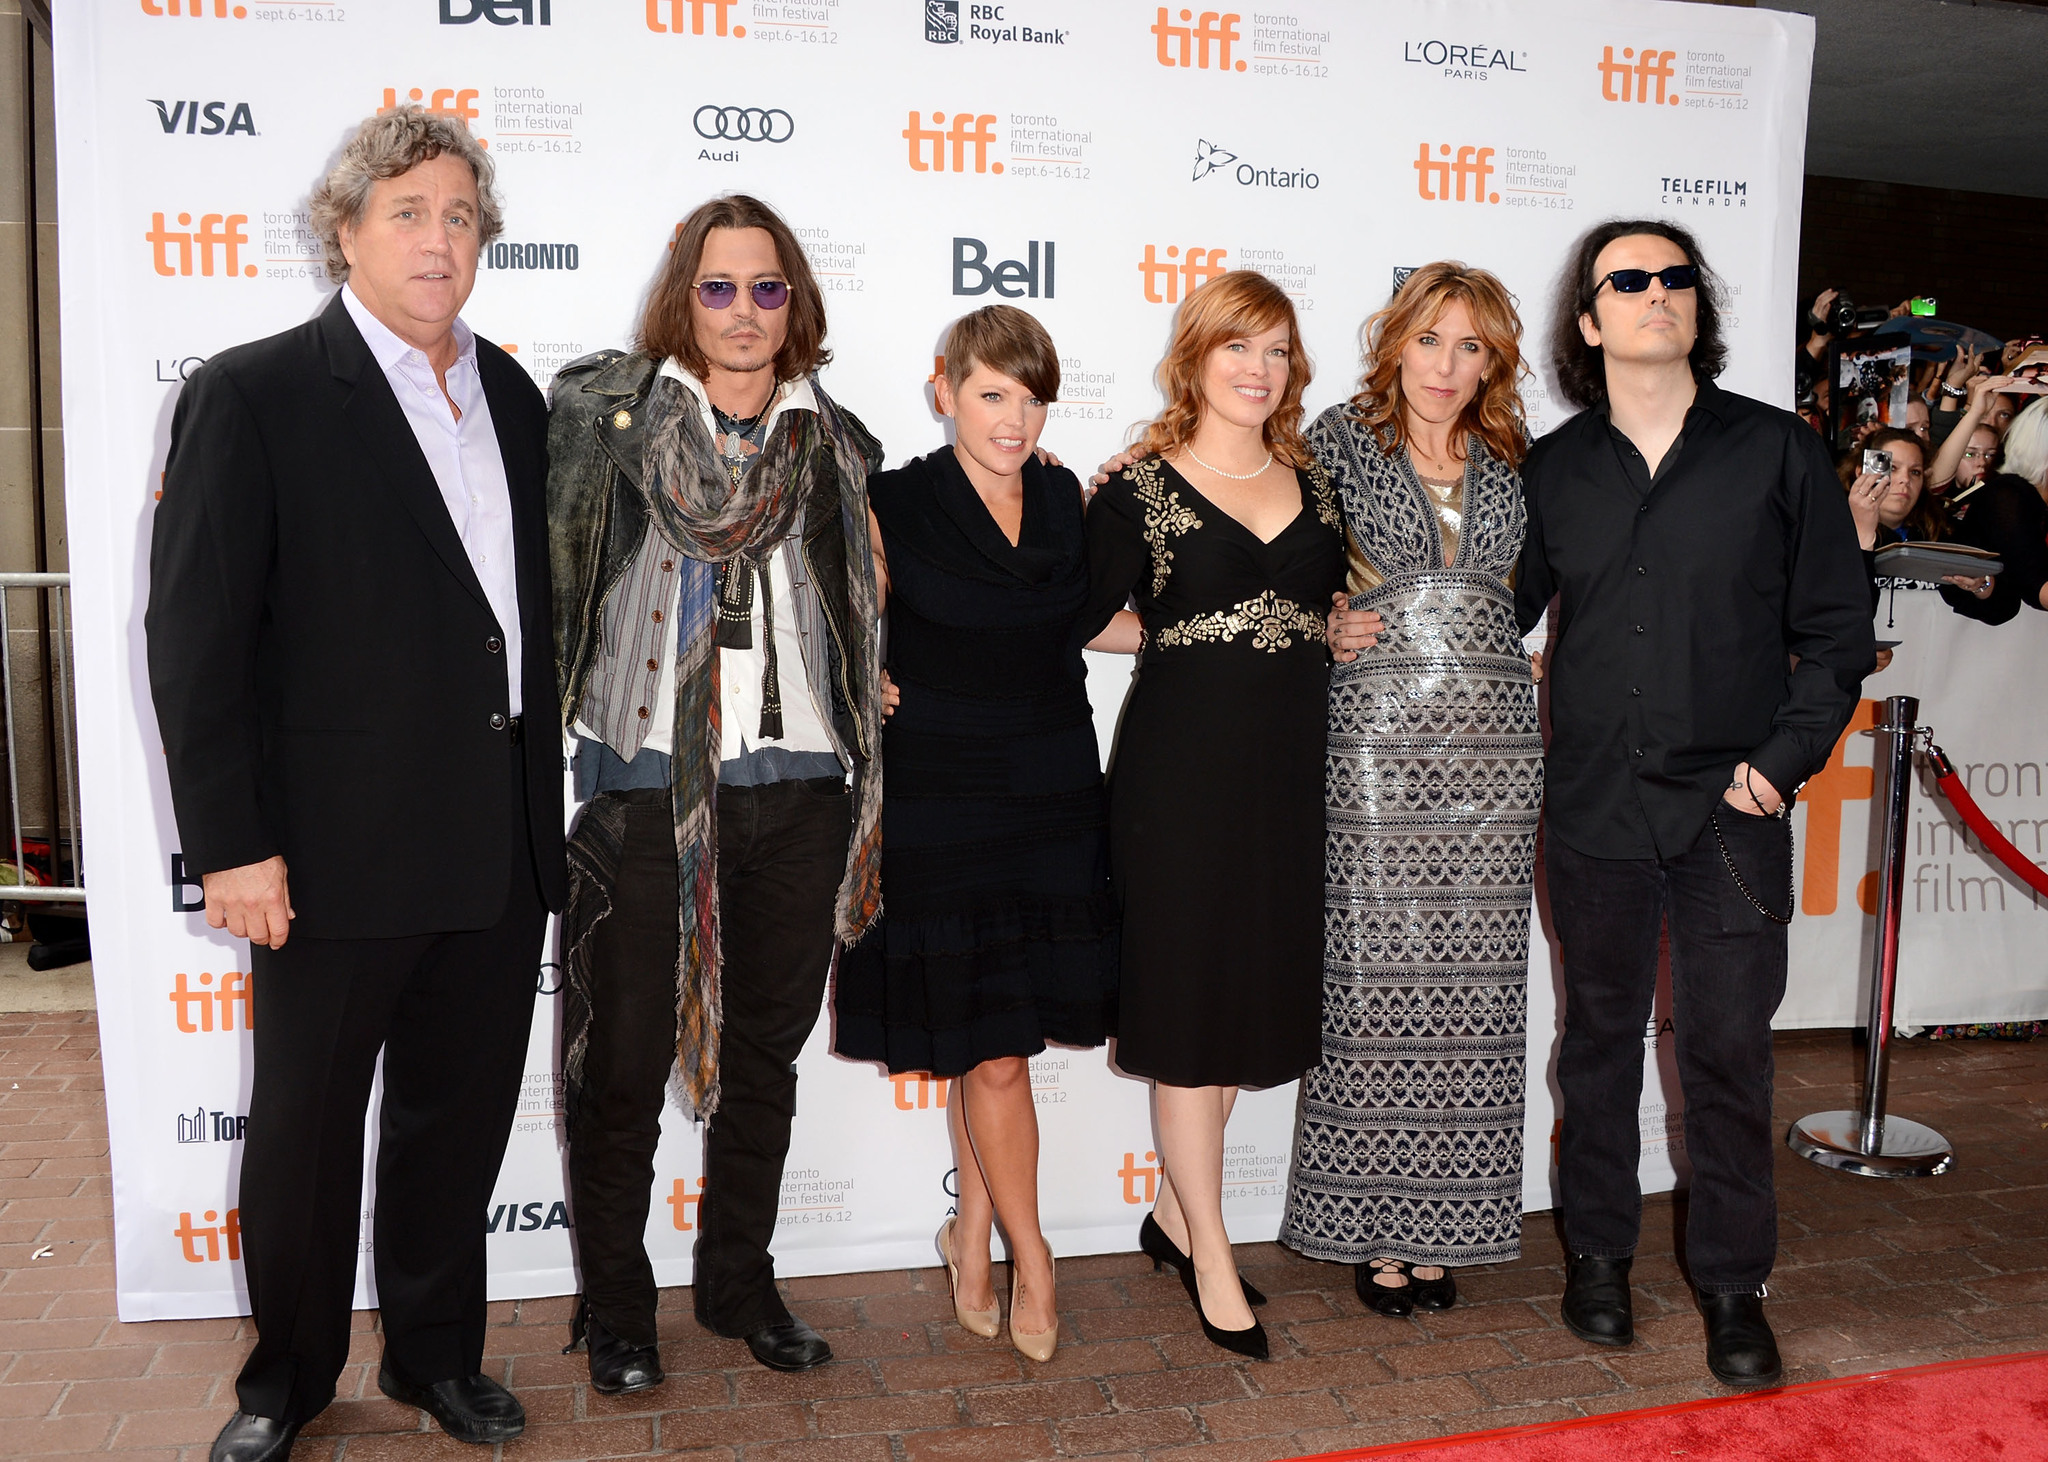 Johnny Depp, Damien Wayne Echols, Natalie Maines, Amy Berg, Tom Bernard and Lorri Davis at event of West of Memphis (2012)